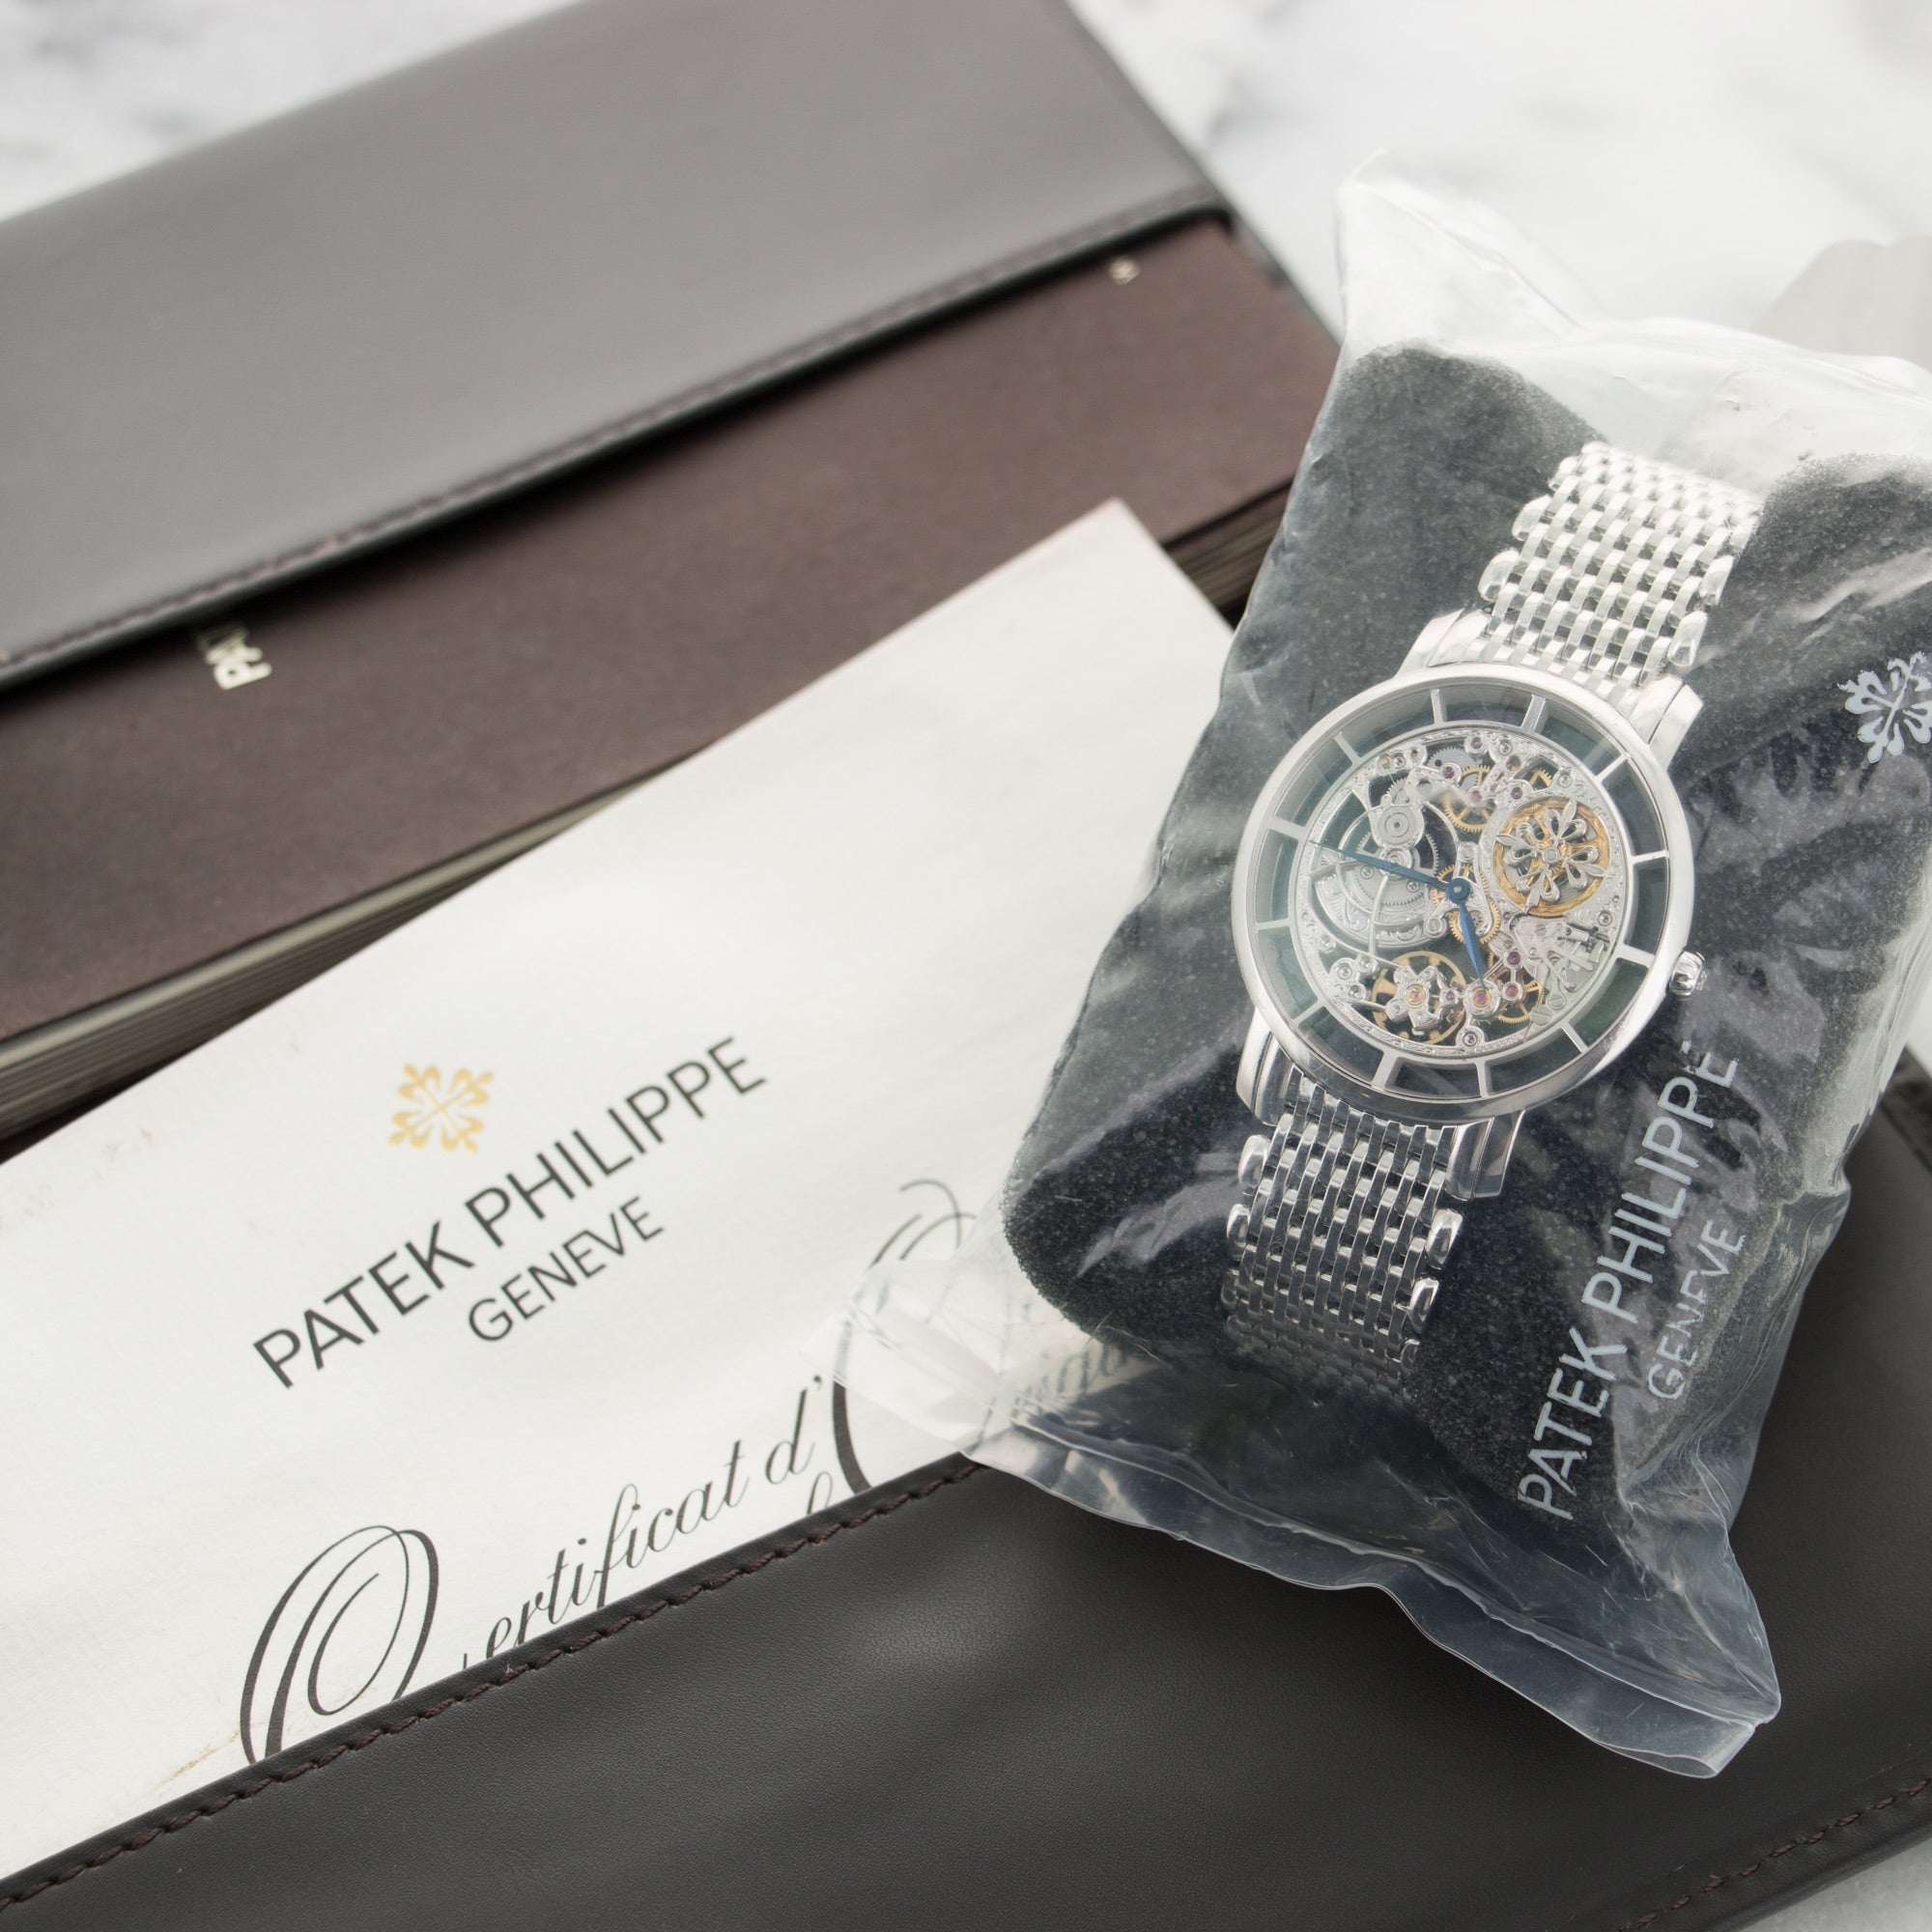 Patek Philippe - Patek Philippe White Gold Skeletonized Ultra-Thin Watch Ref. 5180 - The Keystone Watches